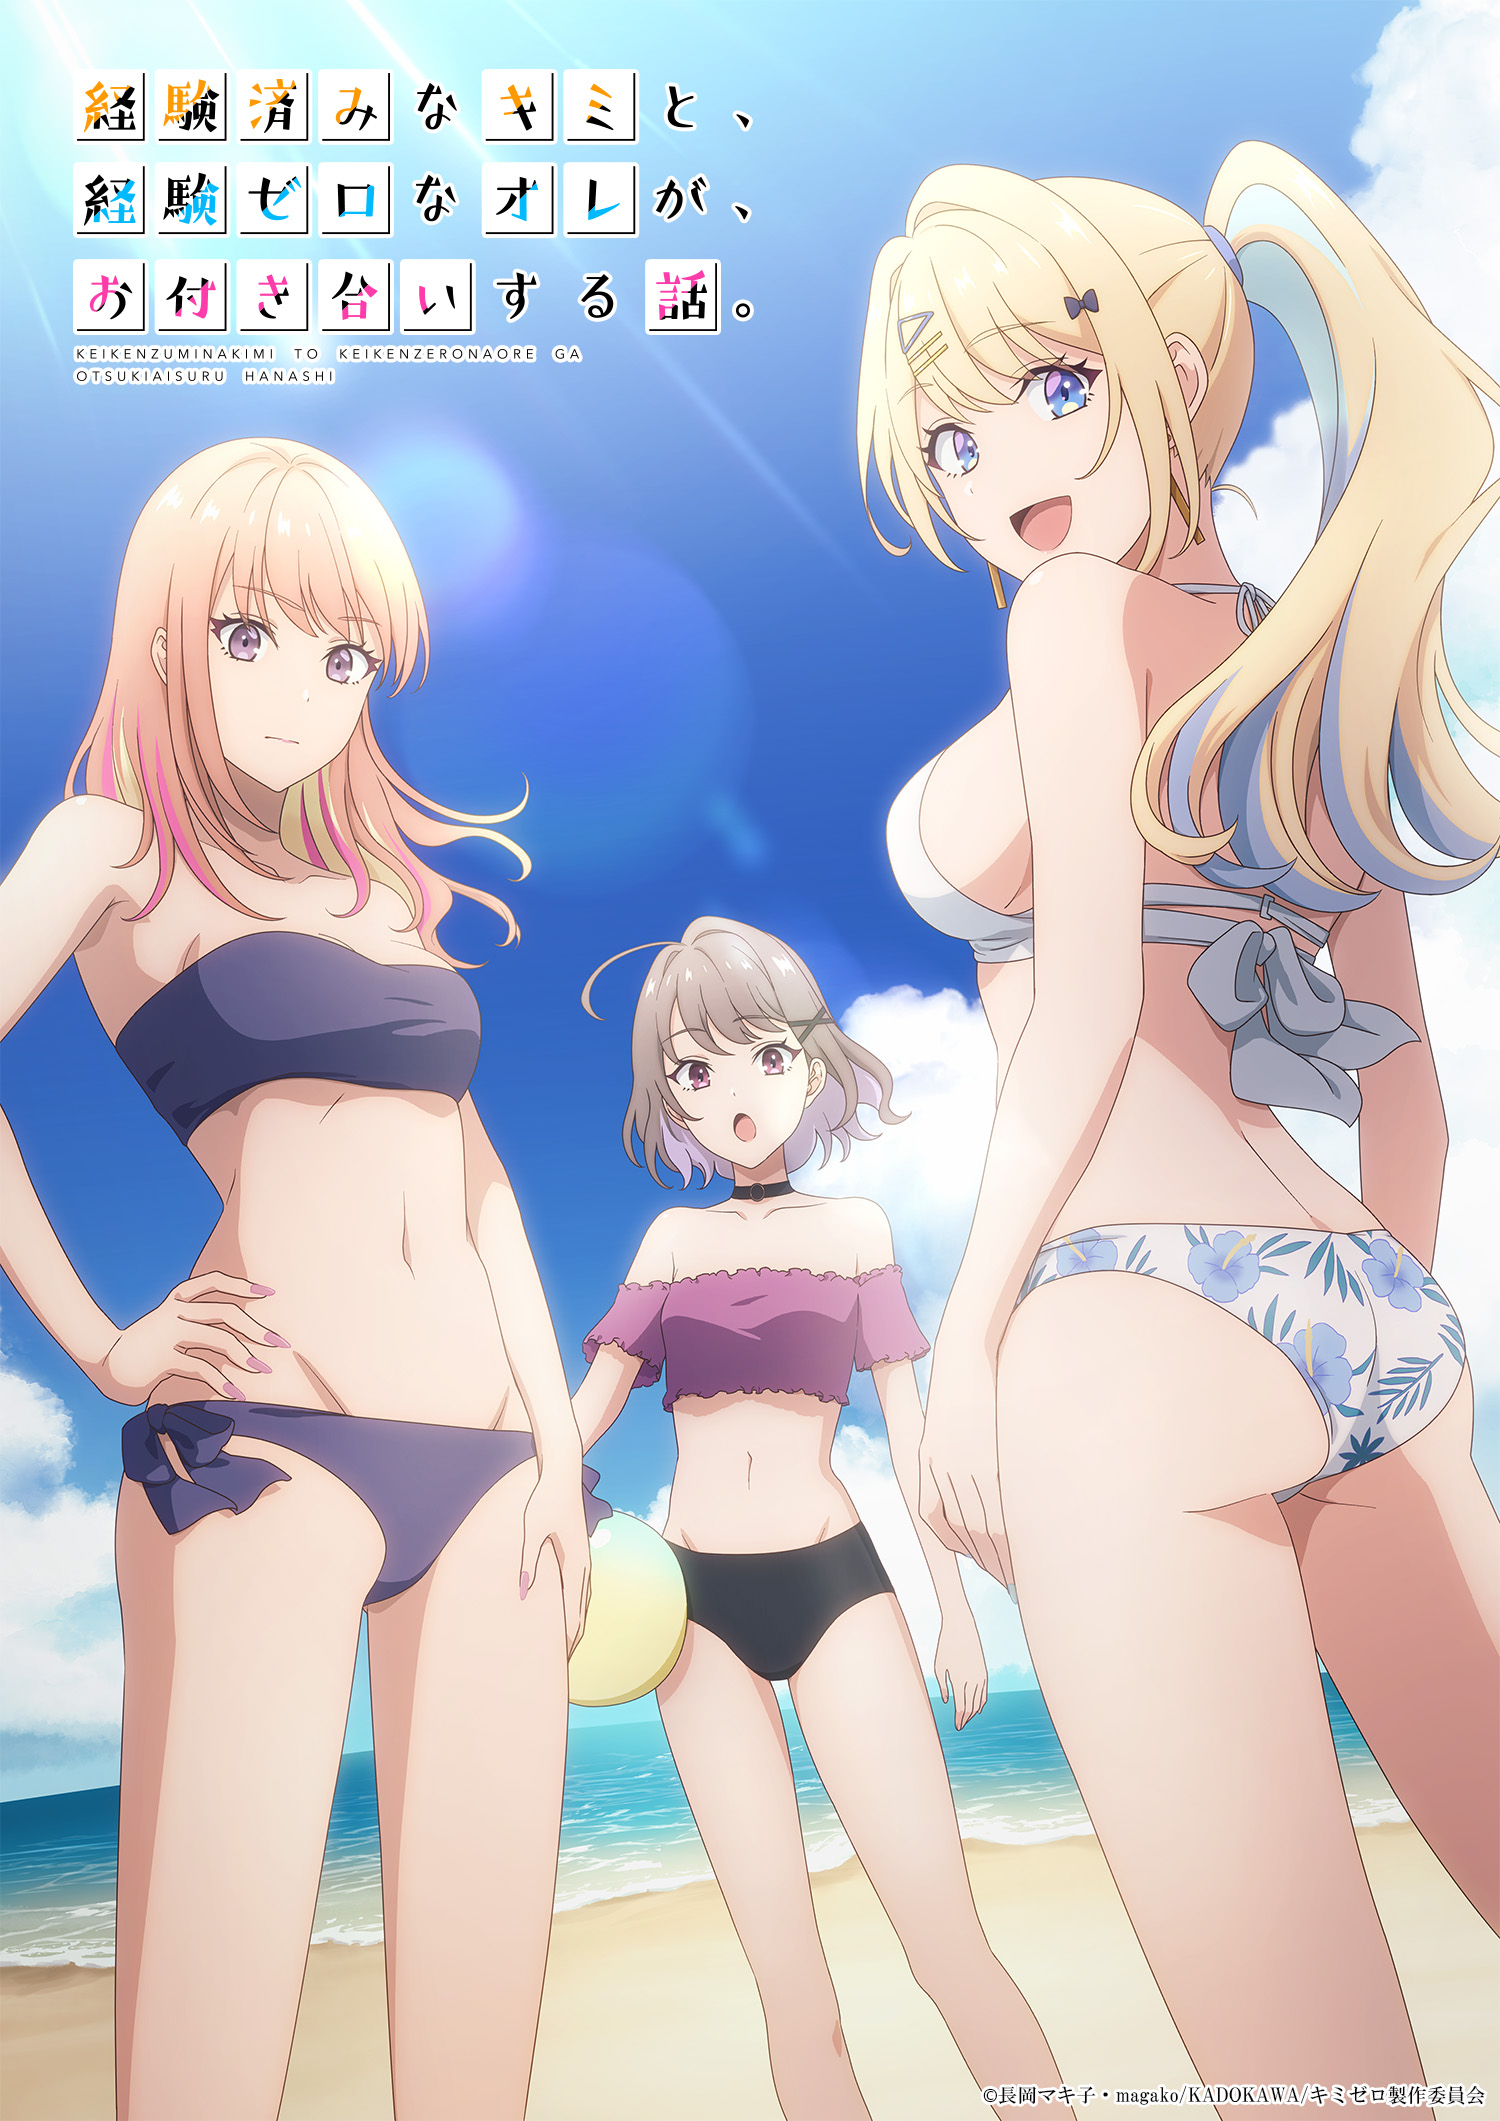 Kimizero summer anime visual